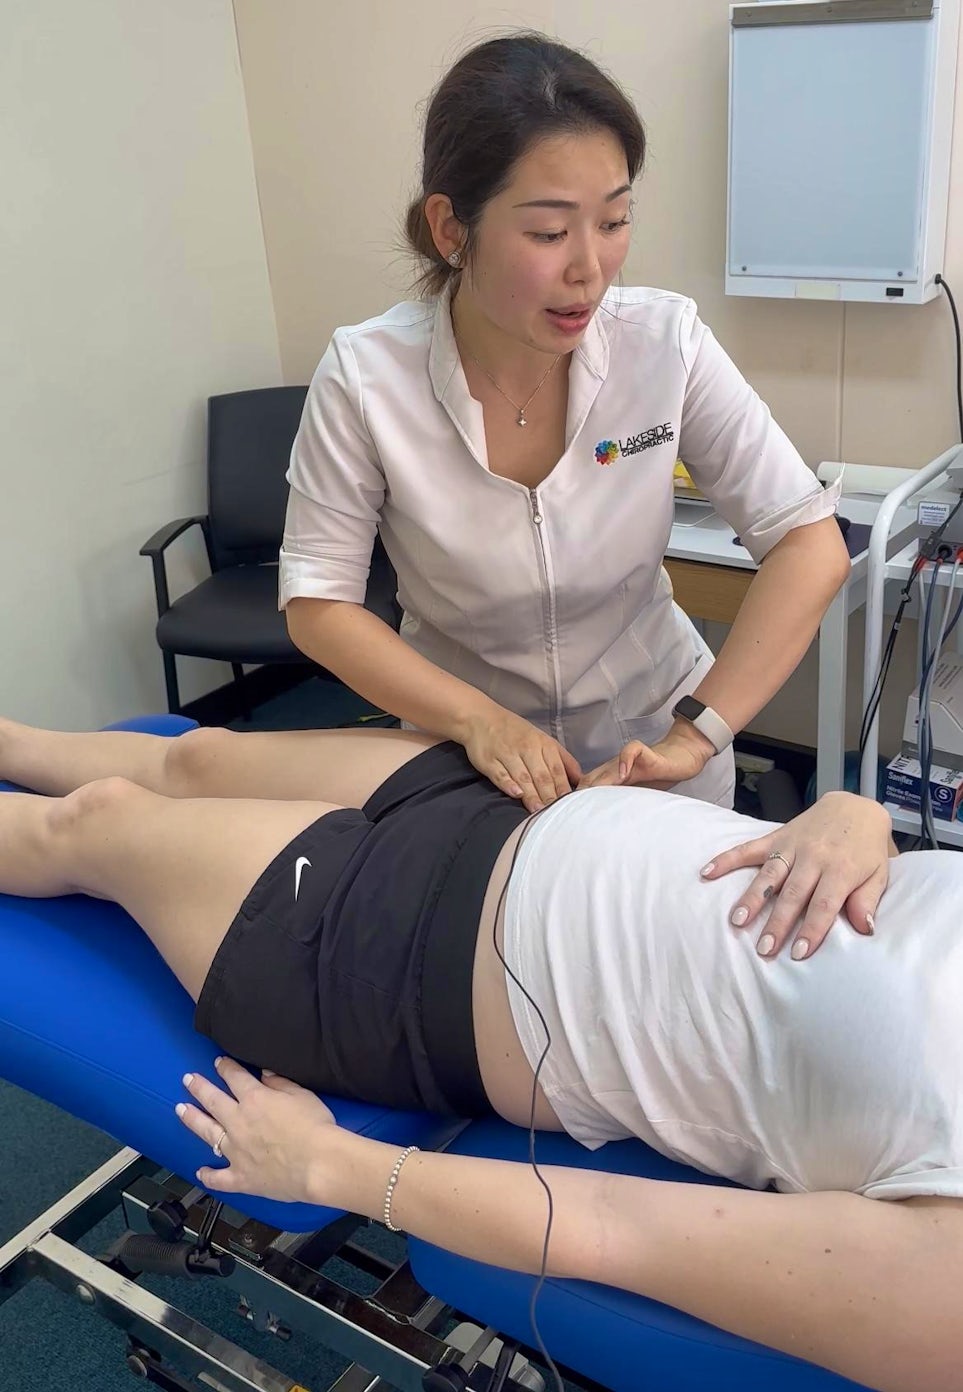 Lakeside Chiropractic treats pregnant woman